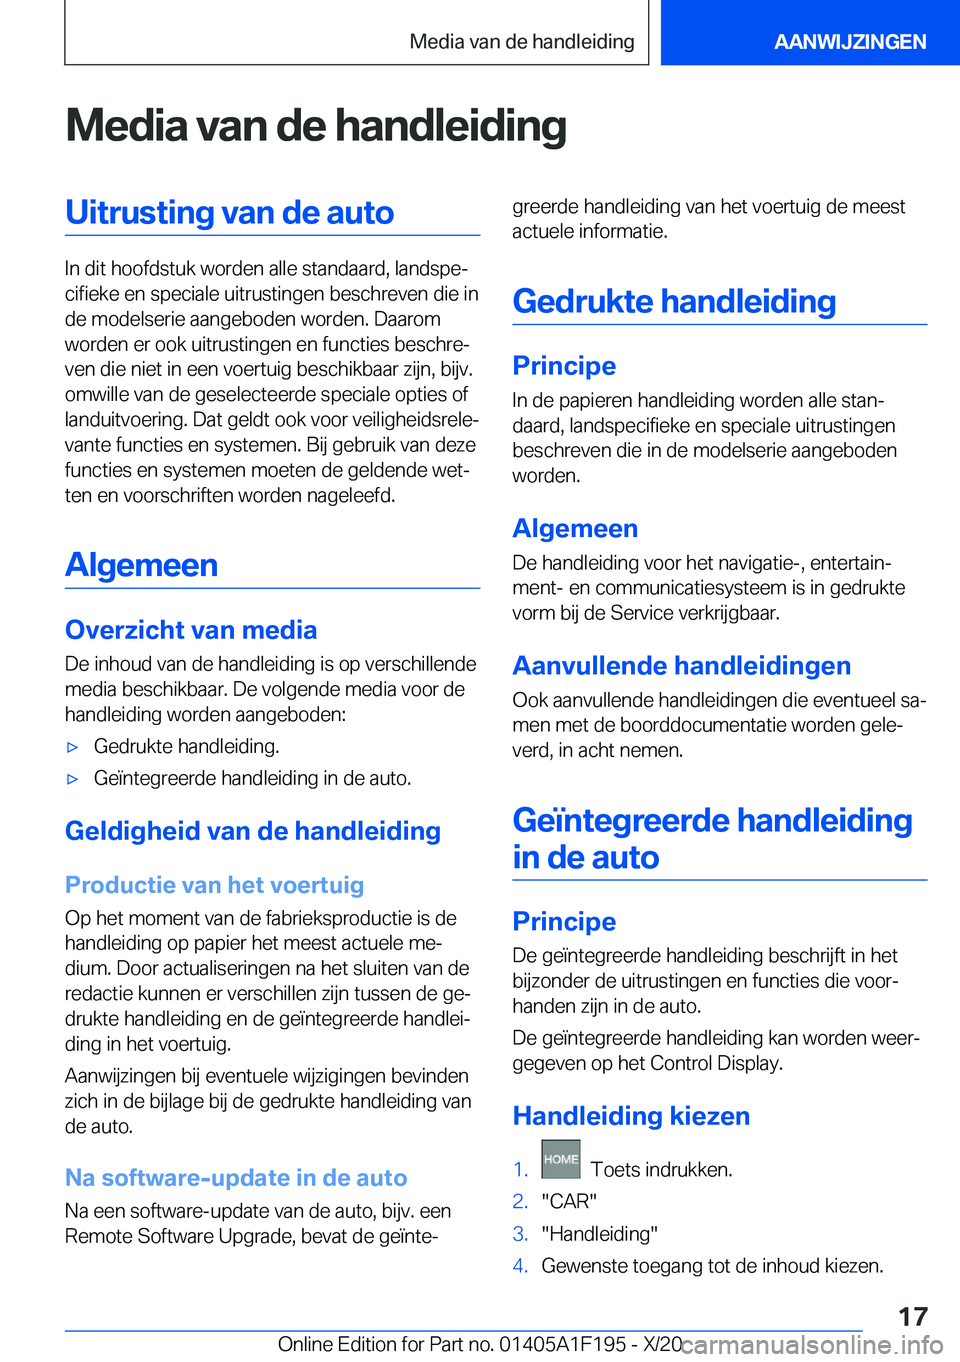 BMW M5 2021  Instructieboekjes (in Dutch) �M�e�d�i�a��v�a�n��d�e��h�a�n�d�l�e�i�d�i�n�g�U�i�t�r�u�s�t�i�n�g��v�a�n��d�e��a�u�t�o
�I�n��d�i�t��h�o�o�f�d�s�t�u�k��w�o�r�d�e�n��a�l�l�e��s�t�a�n�d�a�a�r�d�,��l�a�n�d�s�p�ej�c�i�f�i�e�